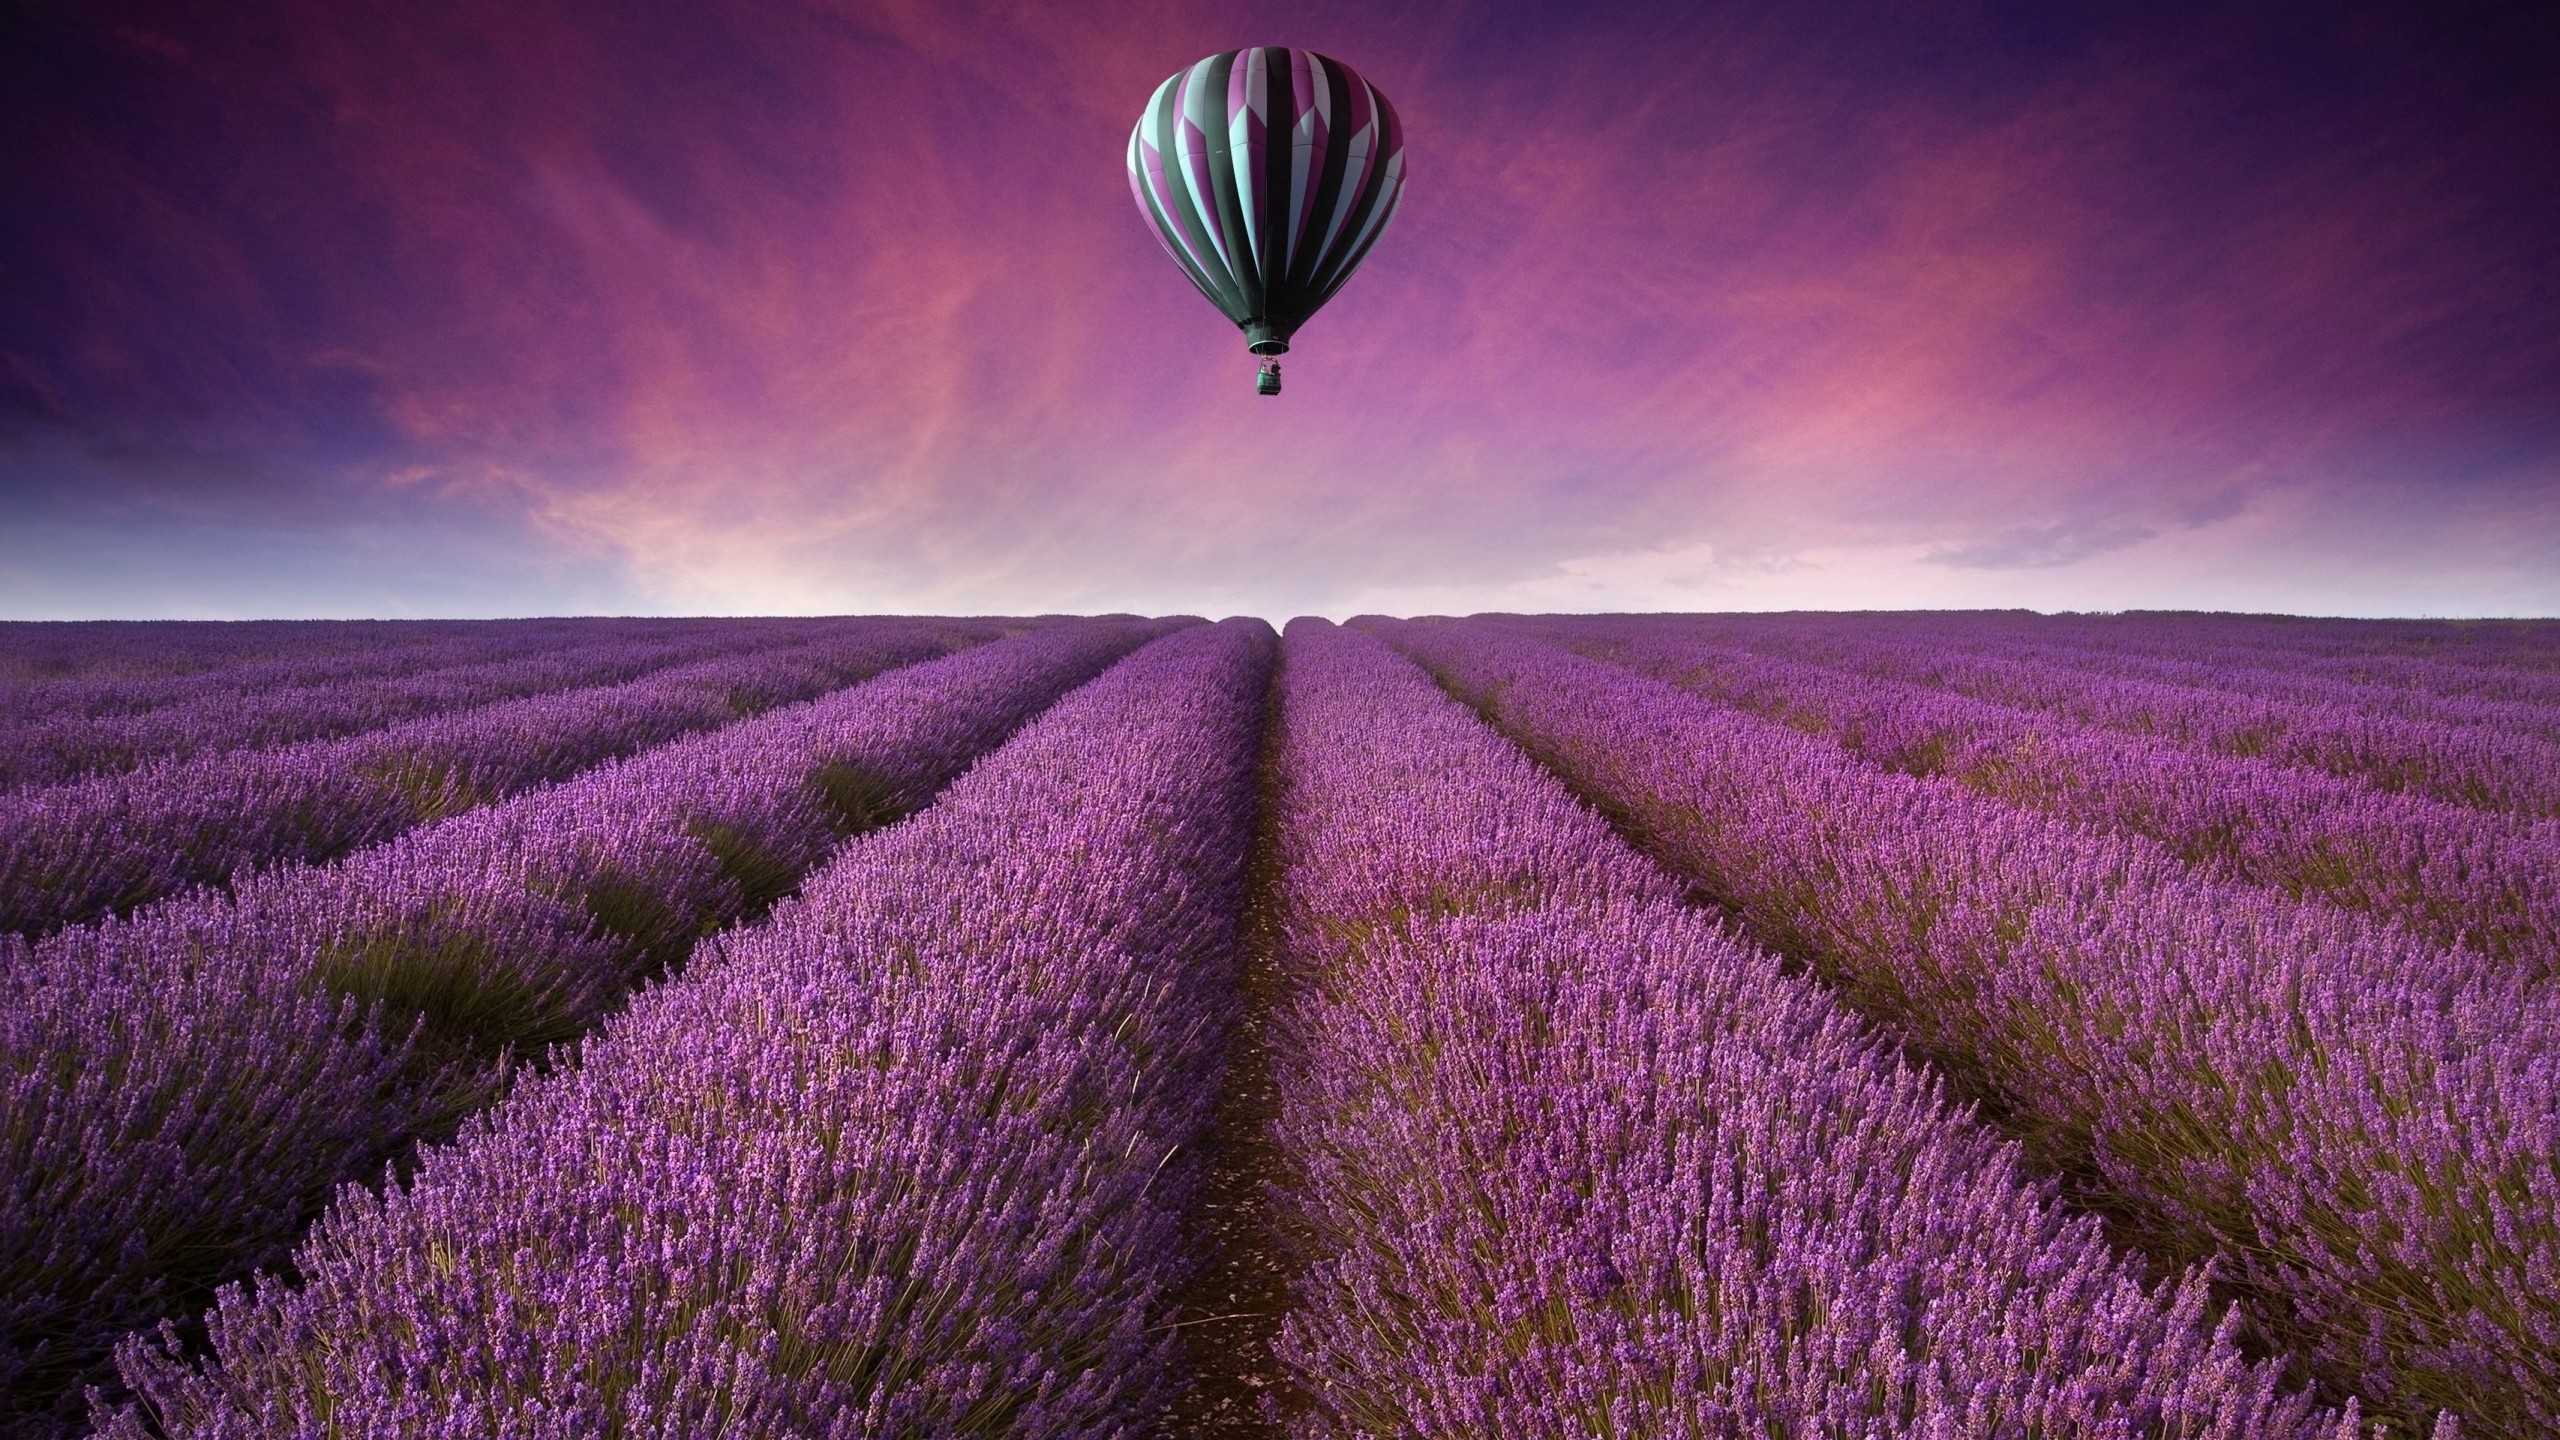 Hot Air Balloon Over Lavender Field Wallpaper for Social Media YouTube Channel Art